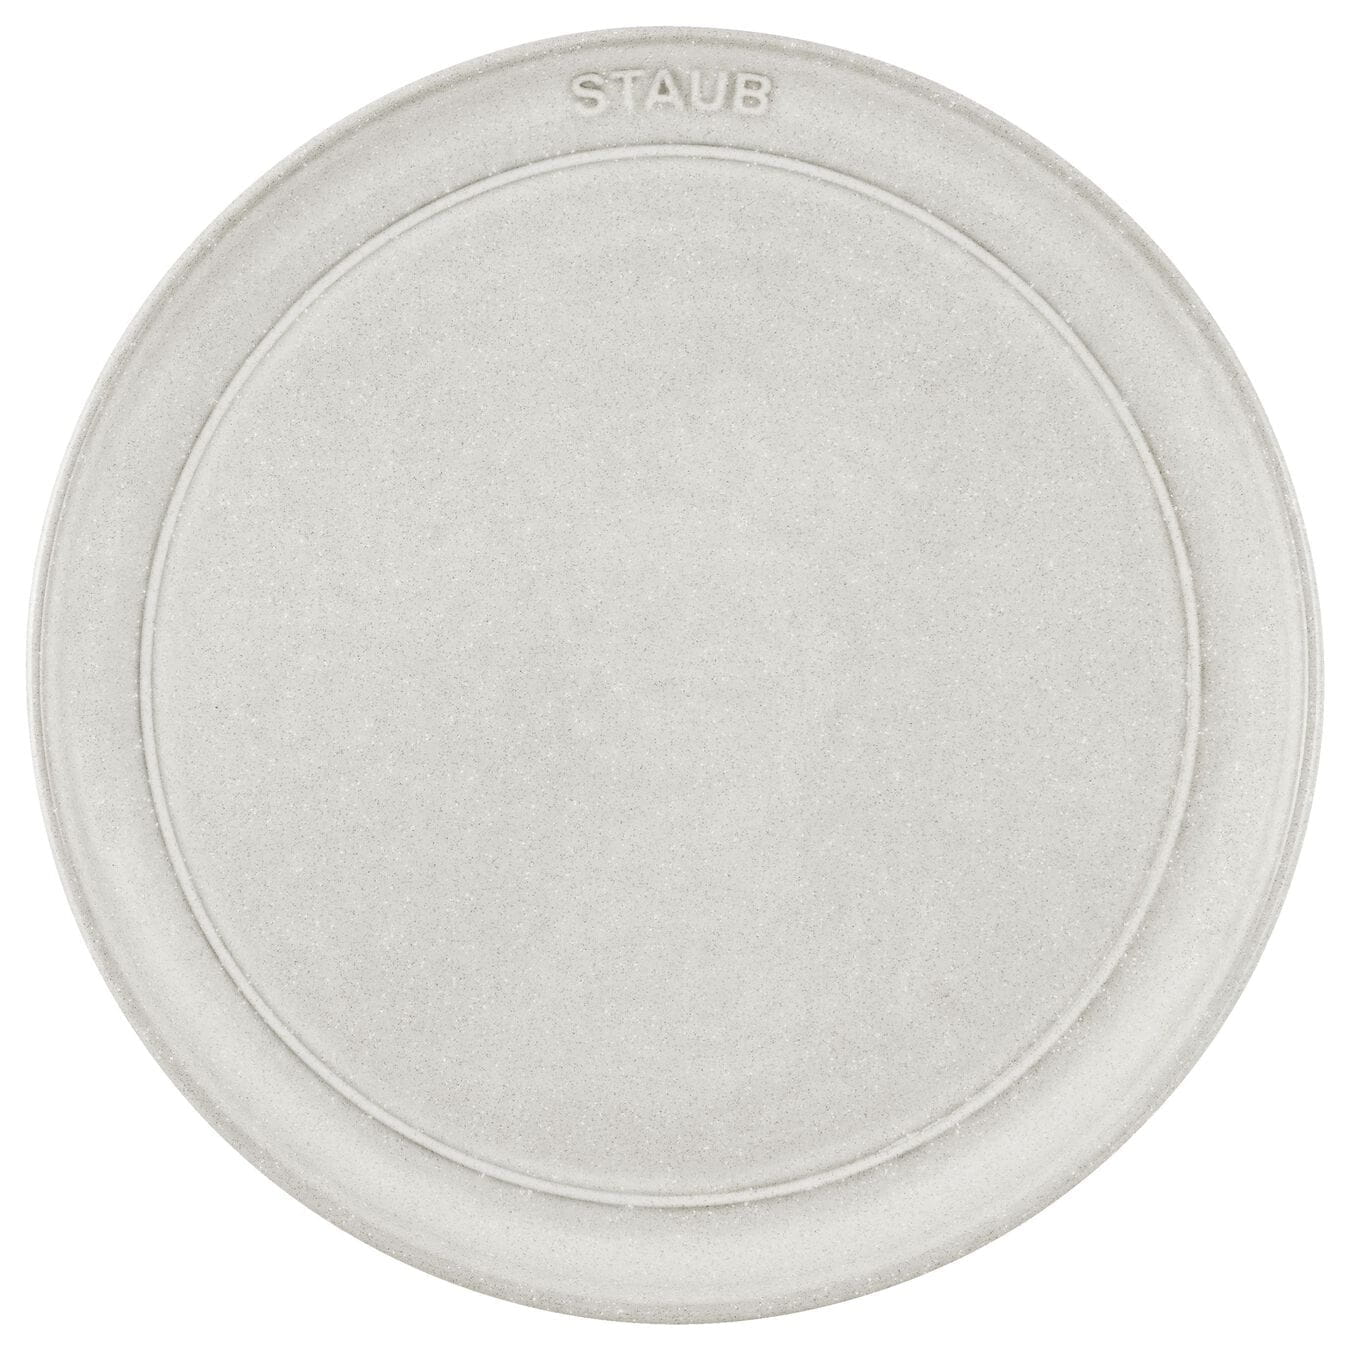 Staub Dining Line Keramik Teller Ø 22 cm Weißer Trüffel